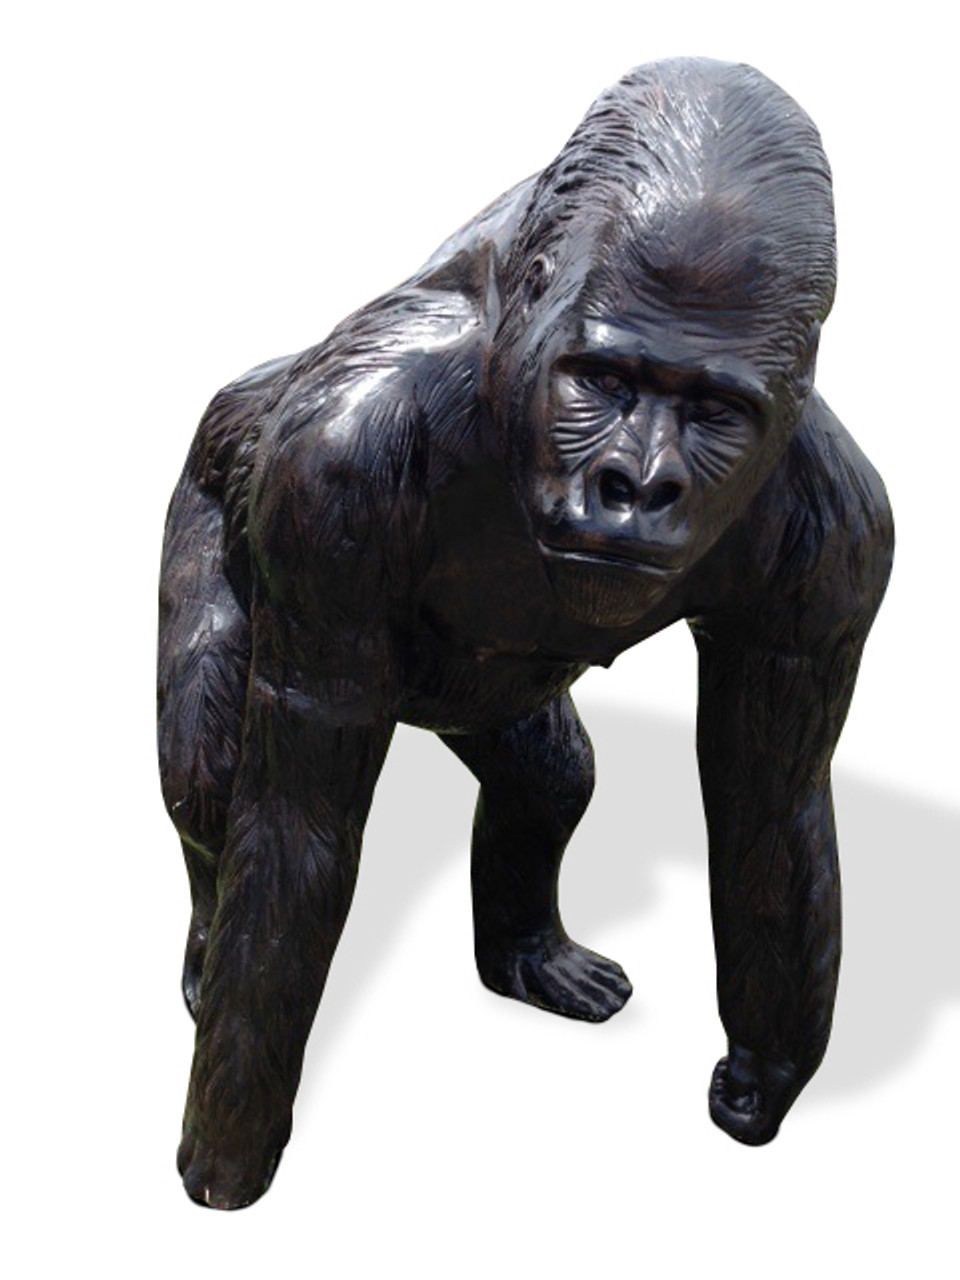 Life Size Gorilla Garden Statue Bronze Color Recycled Aluminum Art -  Sanyork Fair Trade